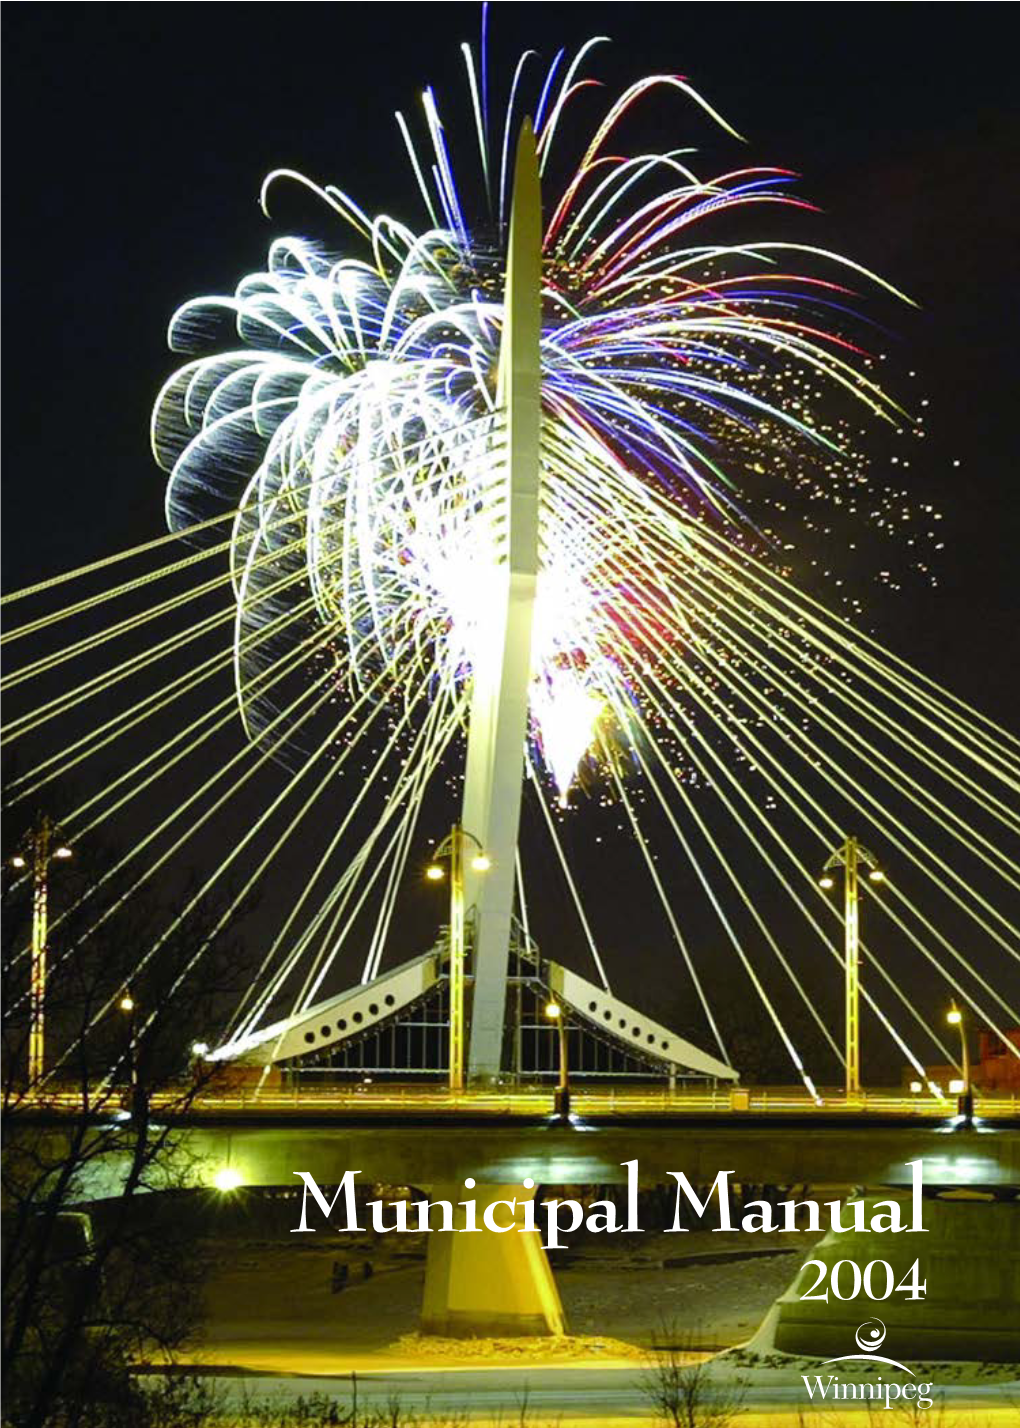 Municipal Manual 2004 Manitoba Cataloguing in Publication Data